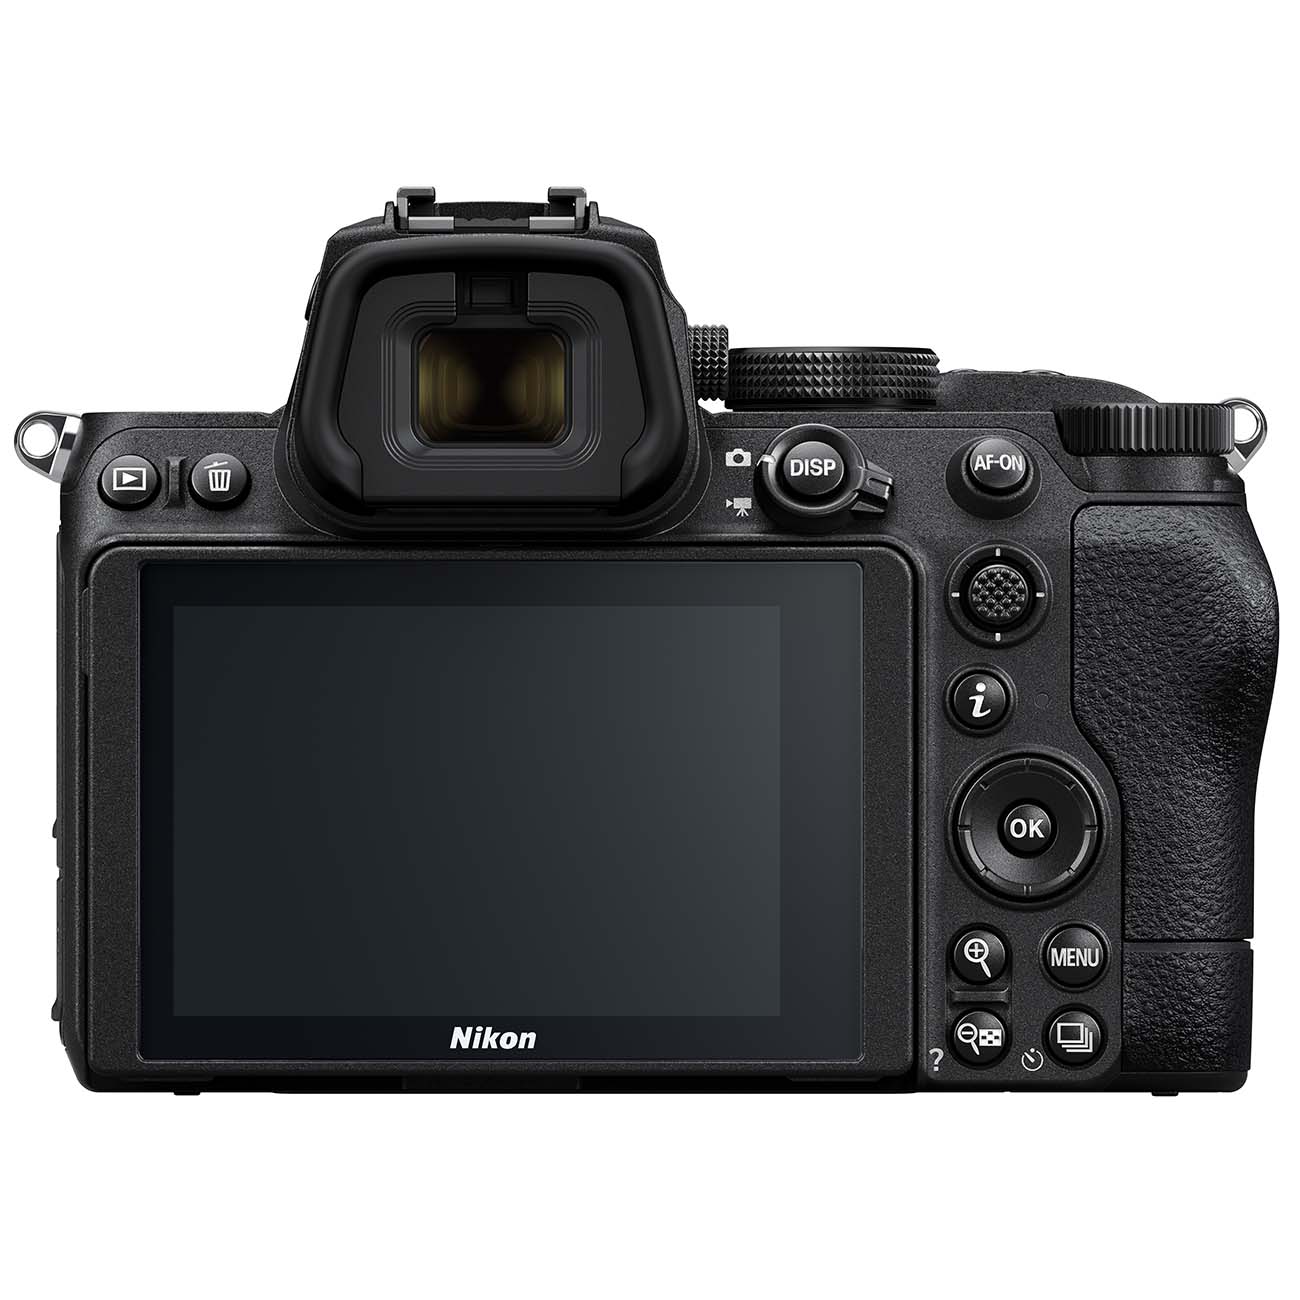 Nikon Z5 Body   FTZ ll Adapter Гарантия Производителя. Ростест/ЕАС